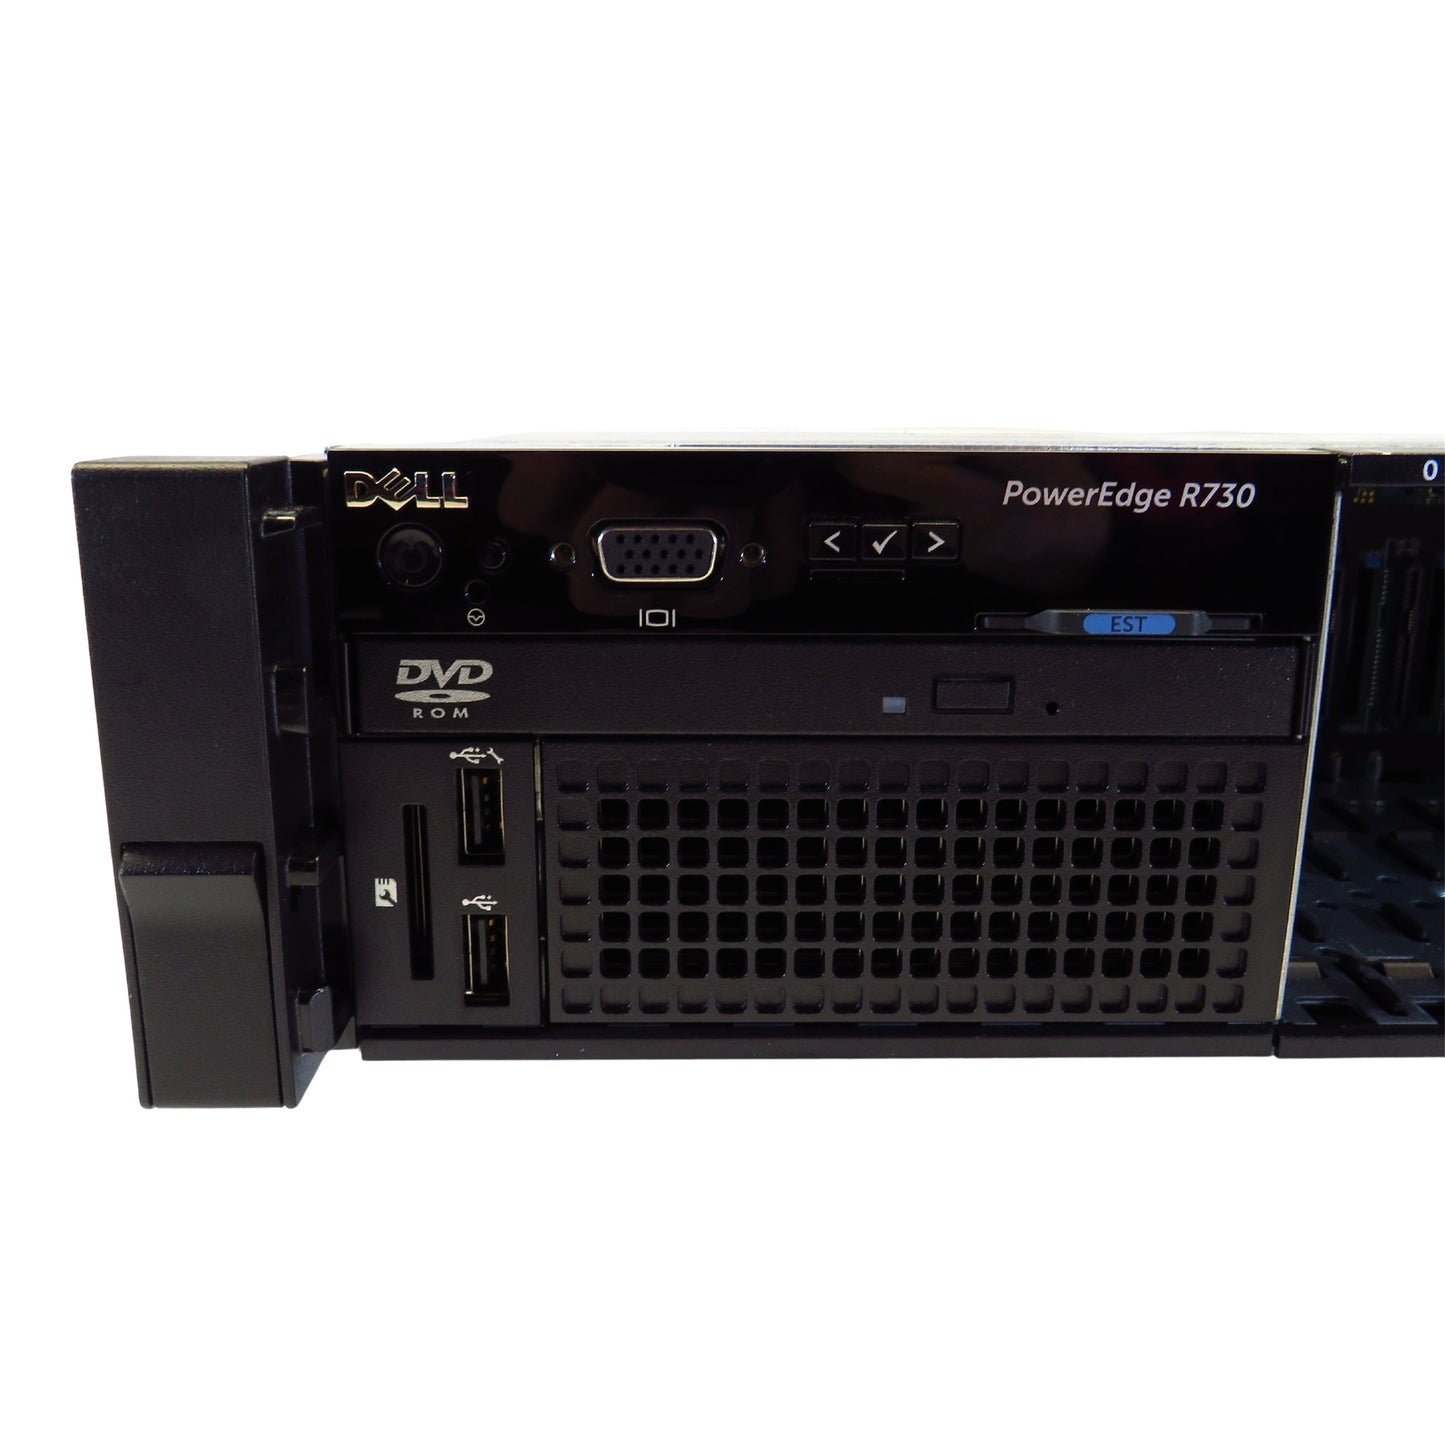 Dell PowerEdge R730 8 Bay 2.5" Intel E5-2640v4 2.4GHz 16GB RAM 2U Server (Refurbished)